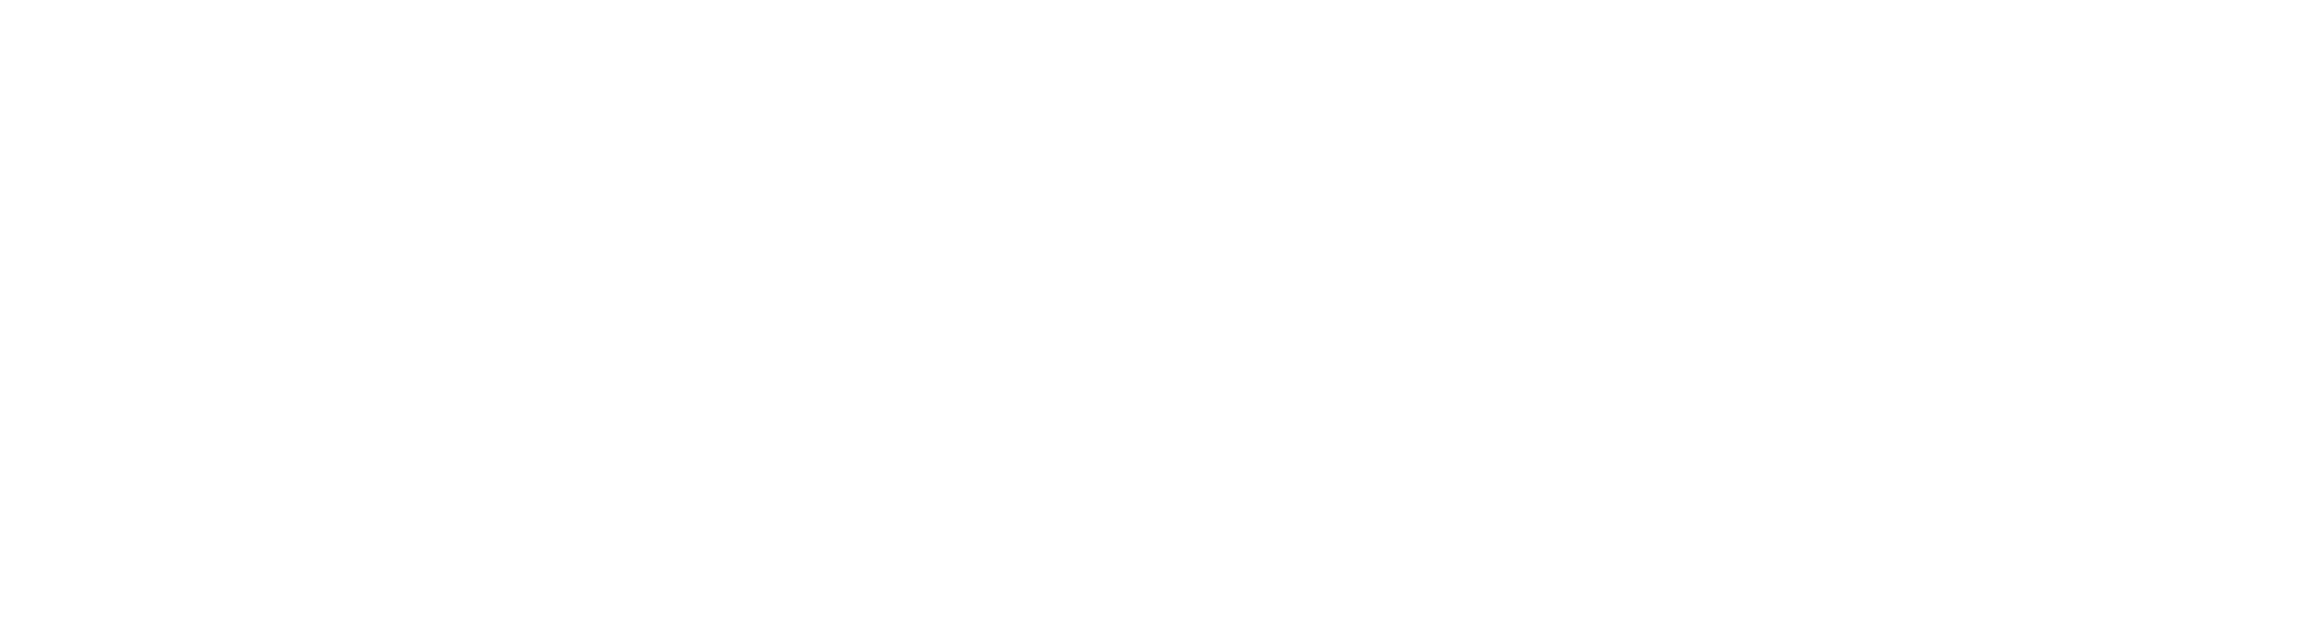 multivac group logo